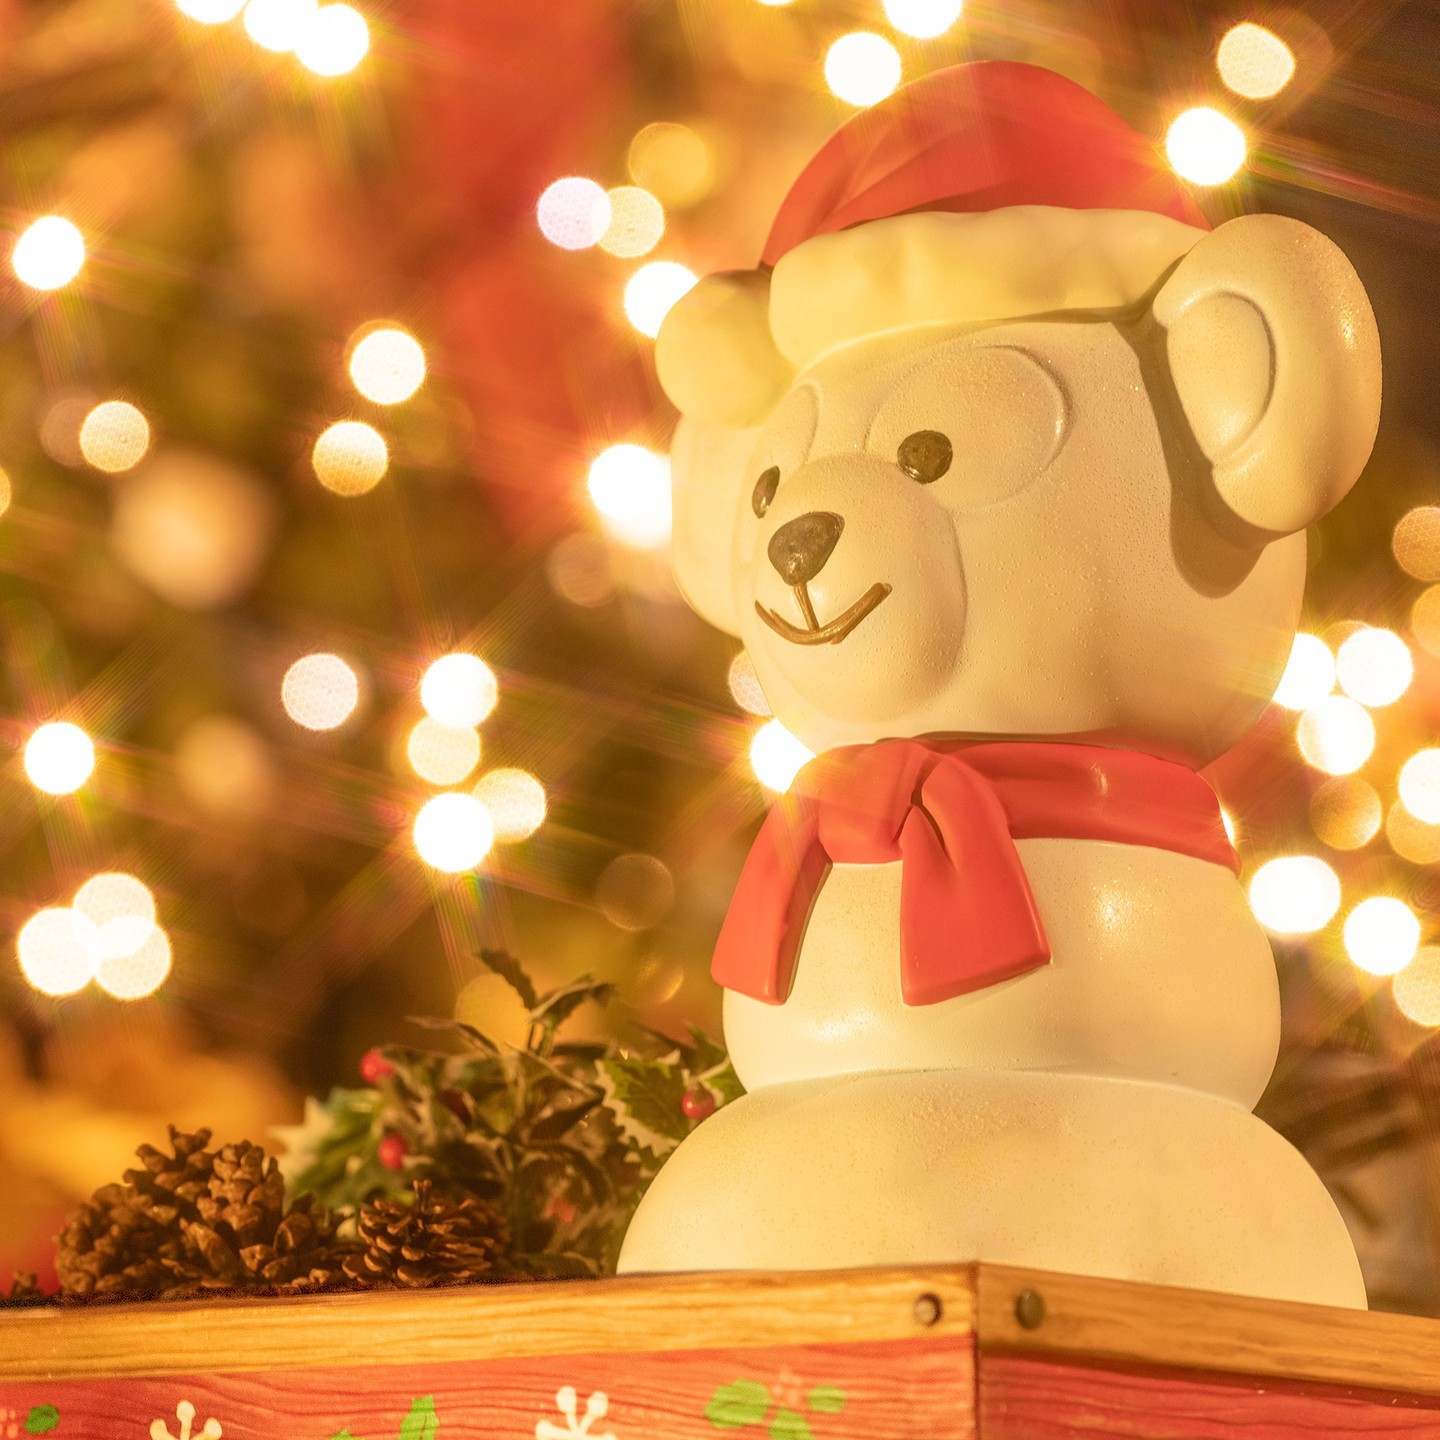 image of Happy holidays!
素敵なクリスマスを・・・☆
#christmas #duffy #tokyodisneysea #tokyodisneyresort...